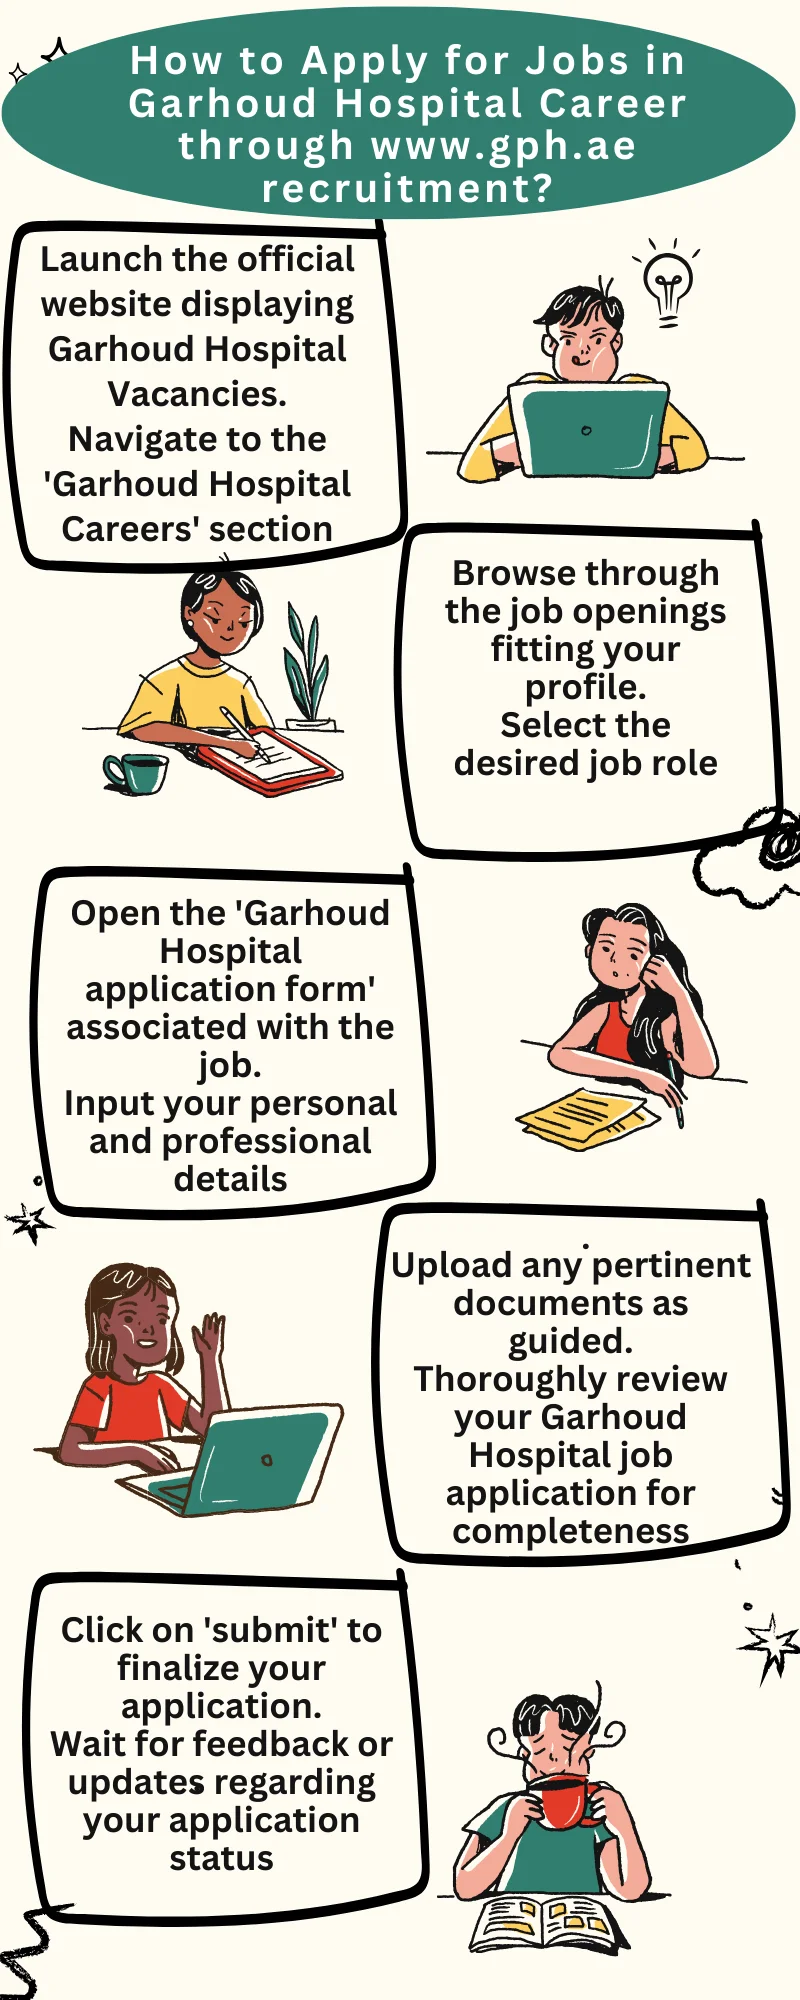 How to Apply for Jobs in Garhoud Hospital Career through www.gph.ae recruitment?